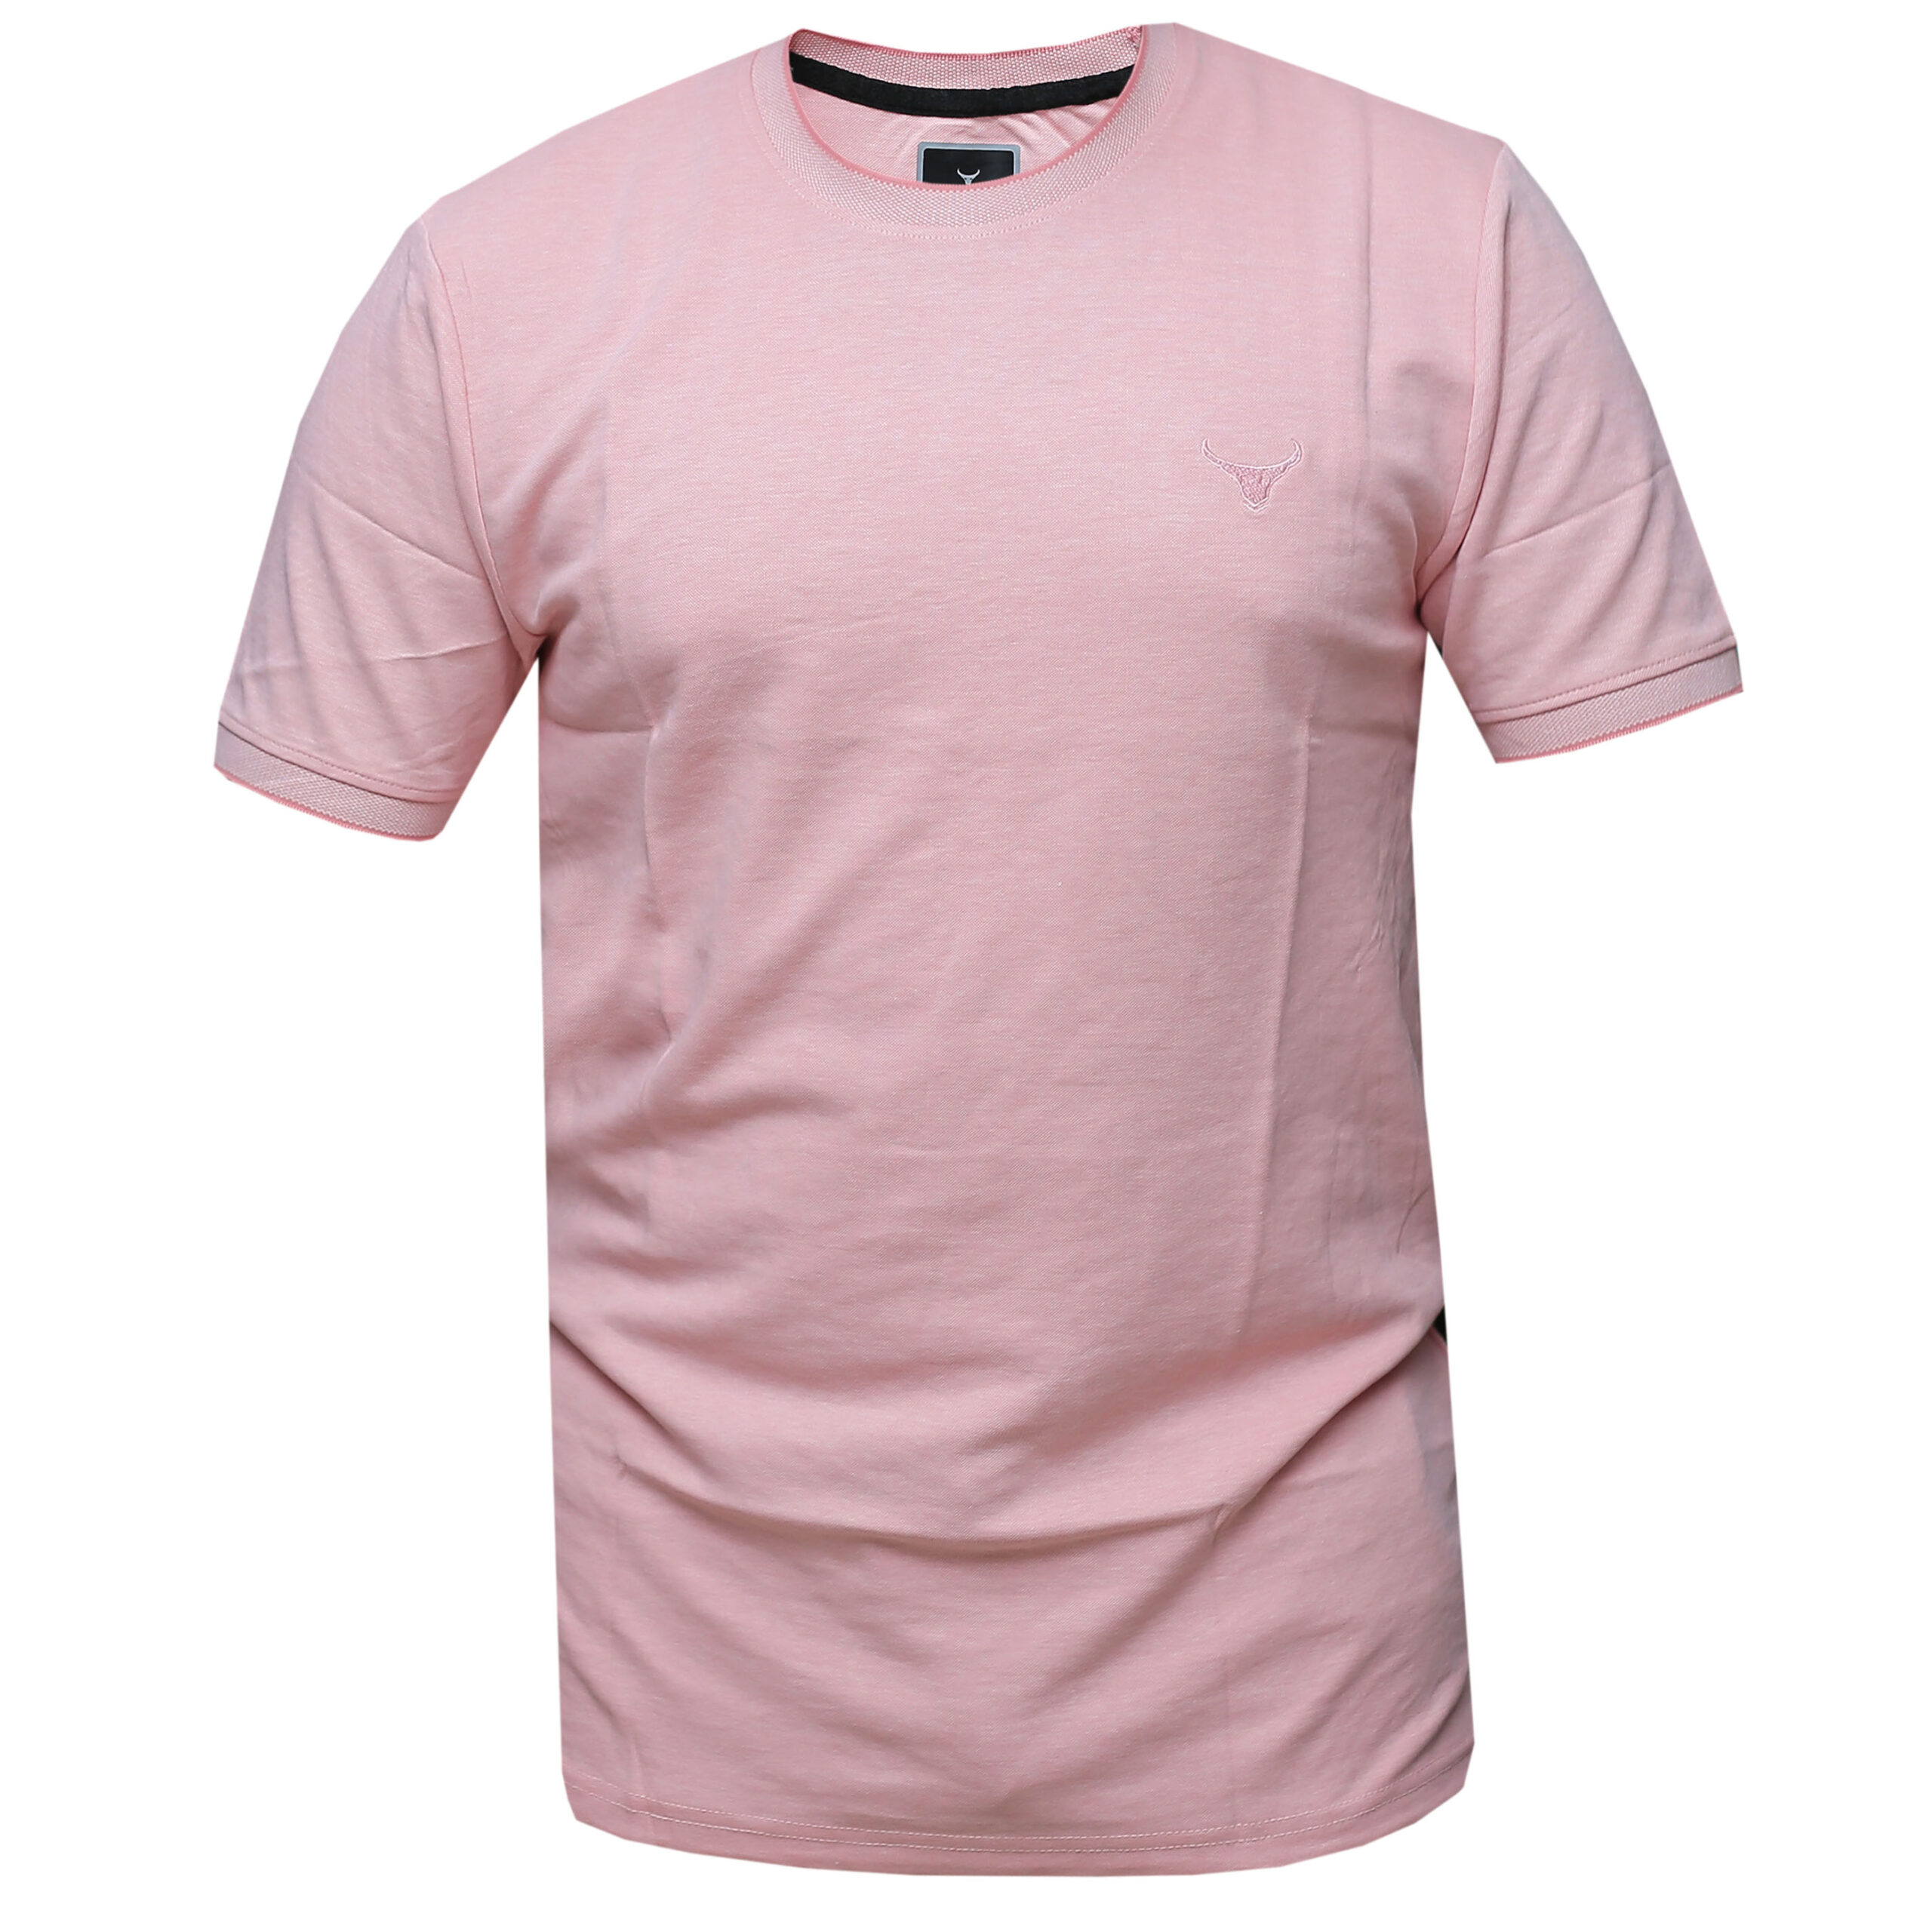 Plain T-Shirts for Men - Casual Wear for Men